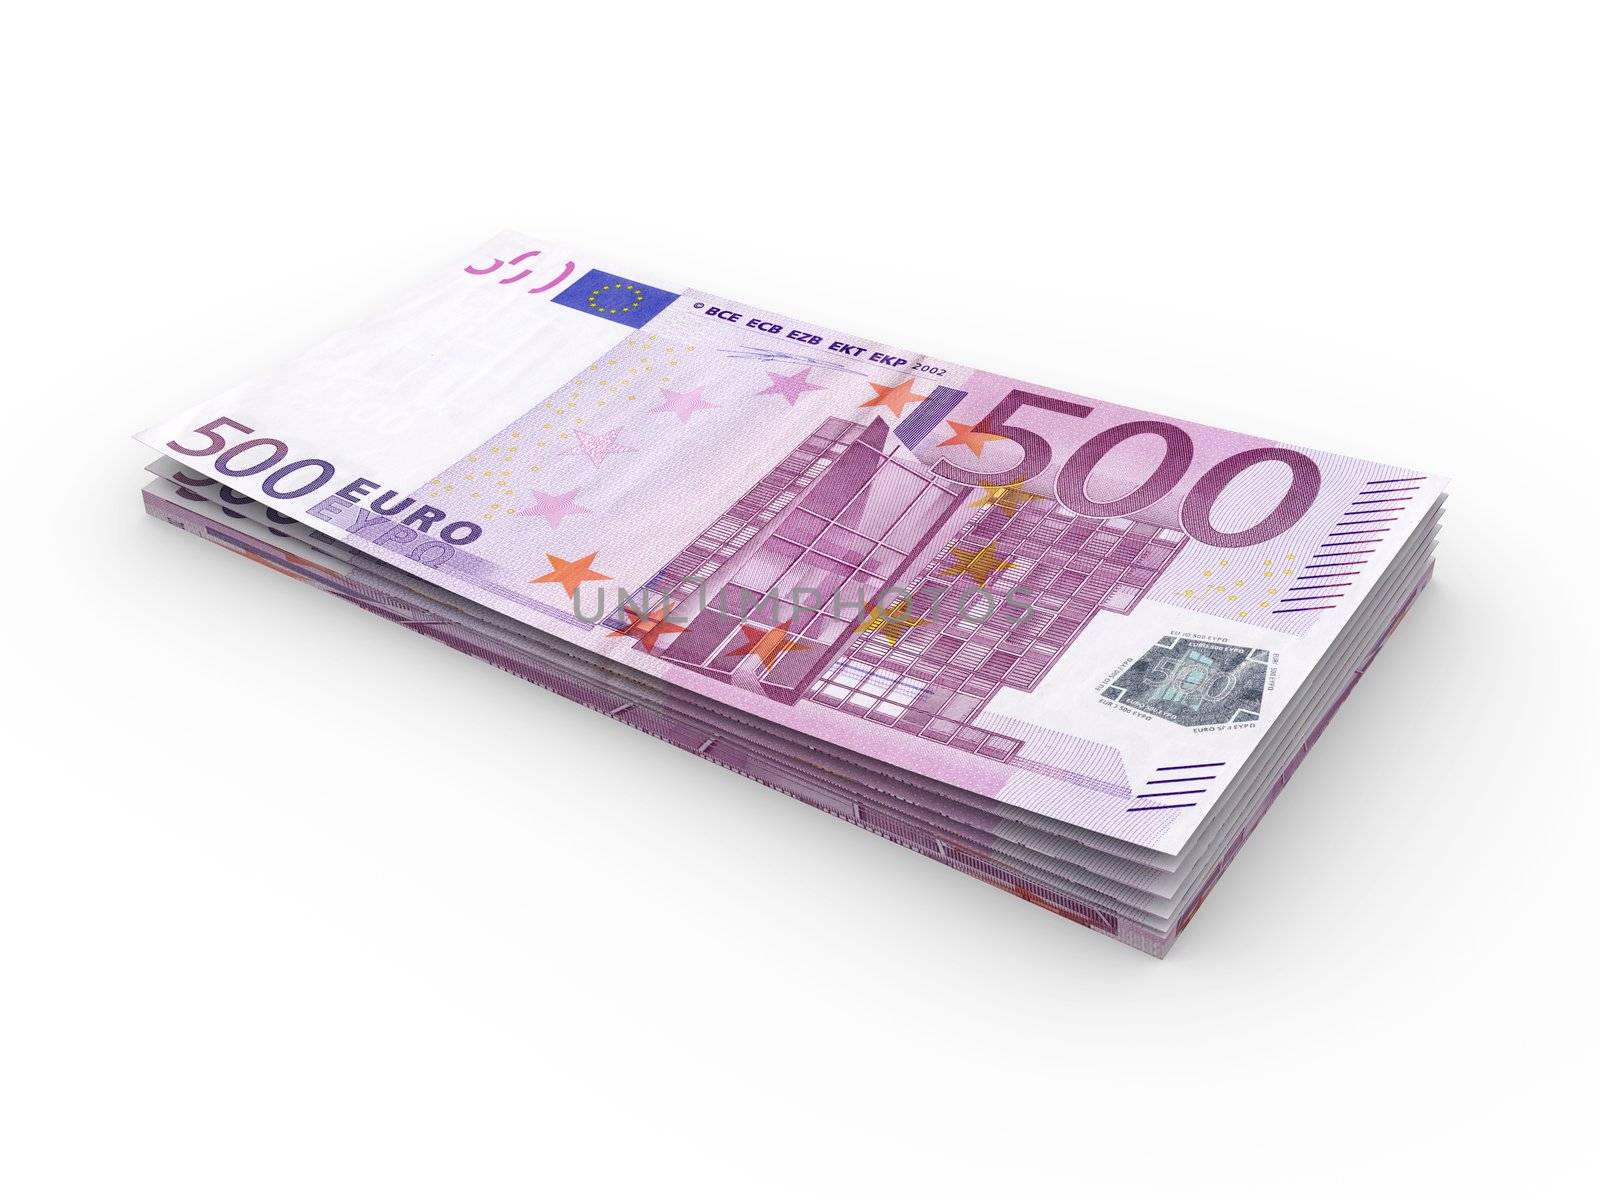 Euro Bills by Spectral